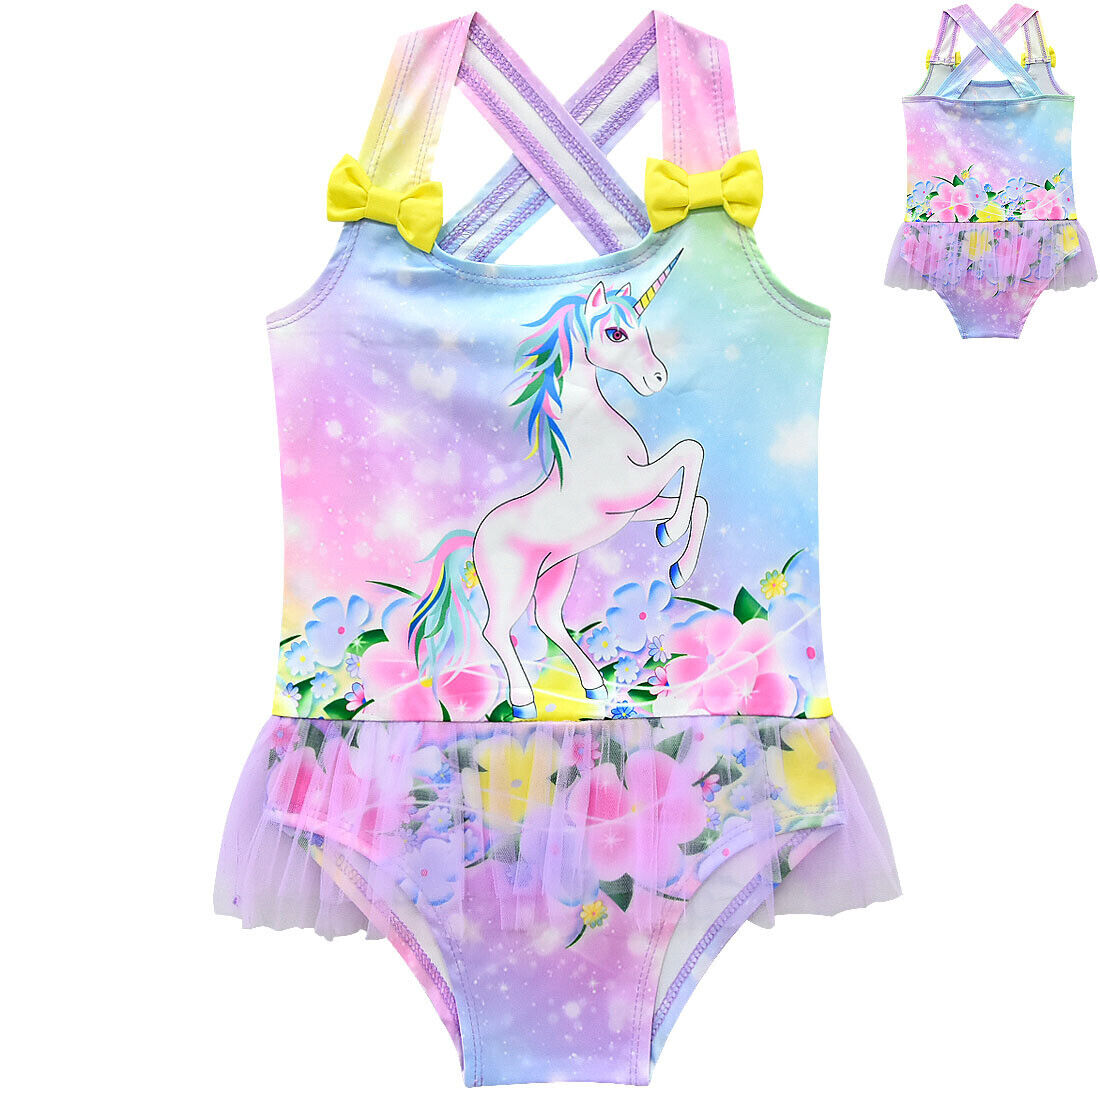 La ciudad Bienes diversos jugador Girls Unicorn Swimsuit Swimwear Bathing swimming suit Bikini Size 3-10 ZG9  | eBay